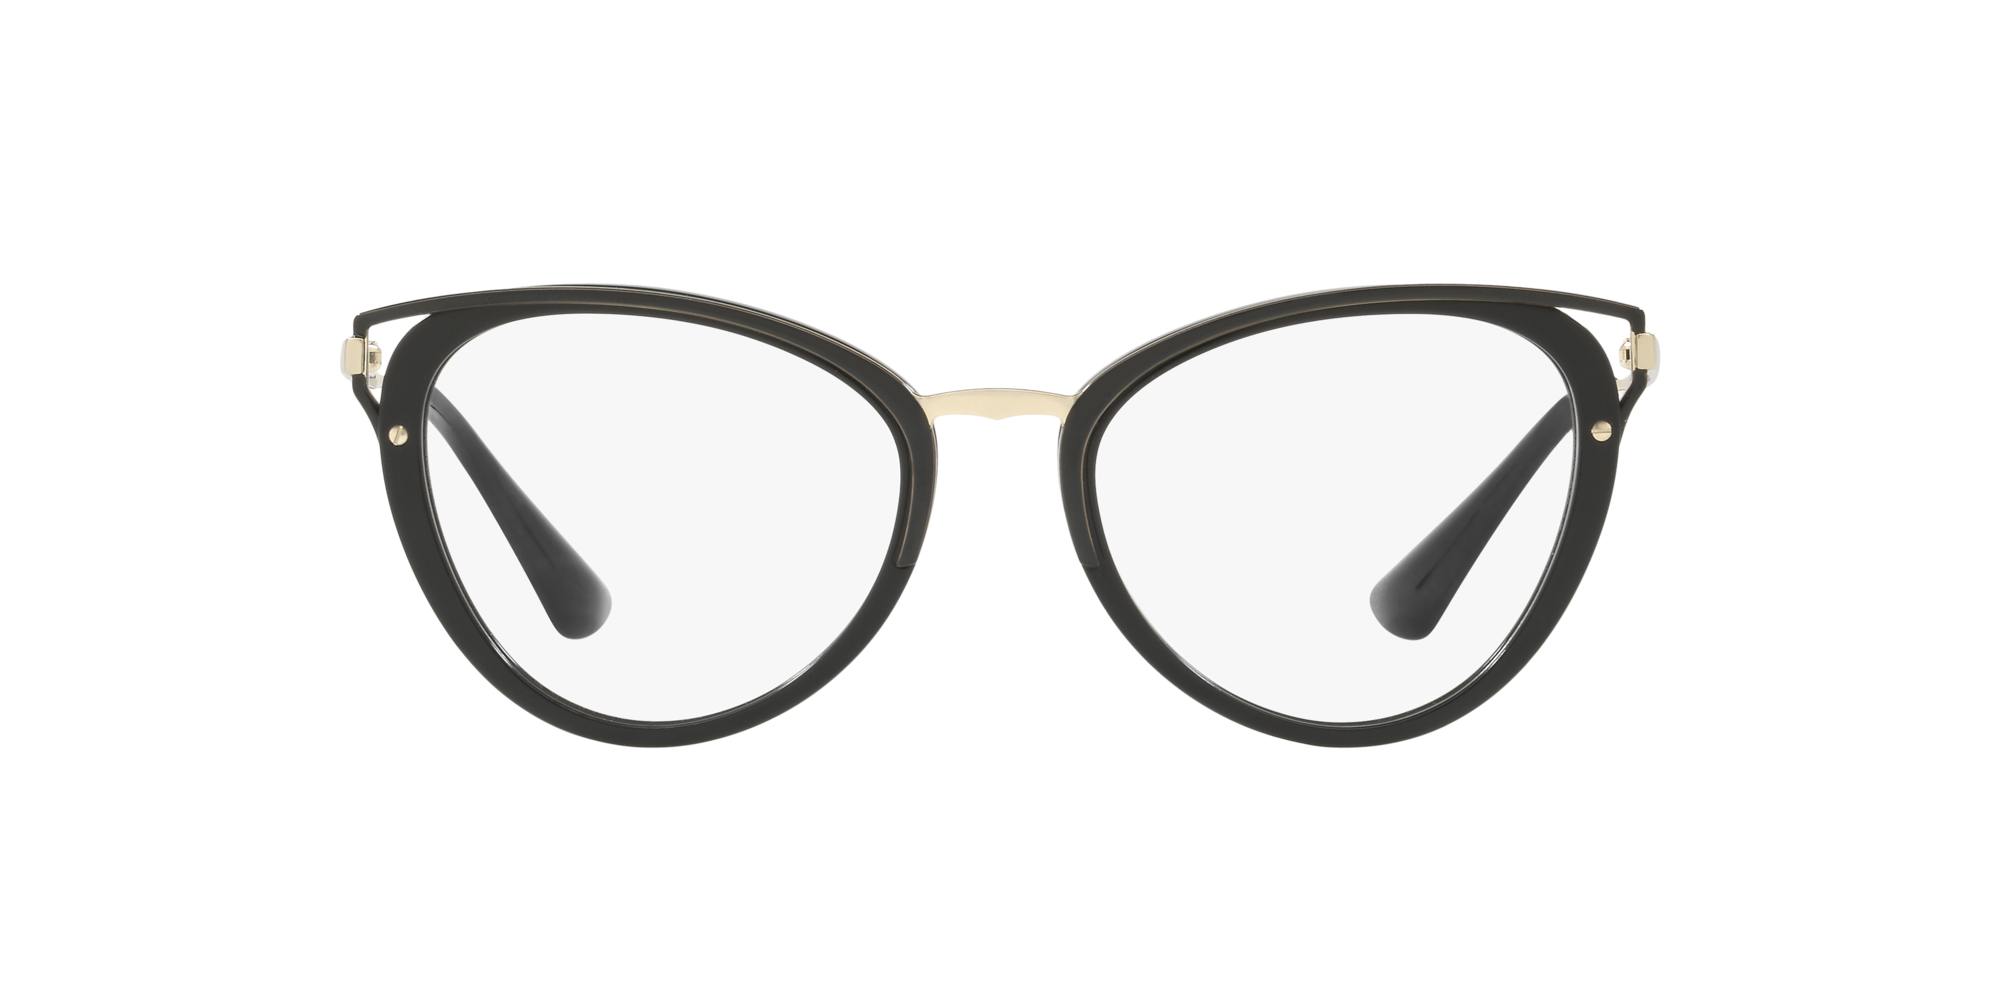 prada glasses lenscrafters